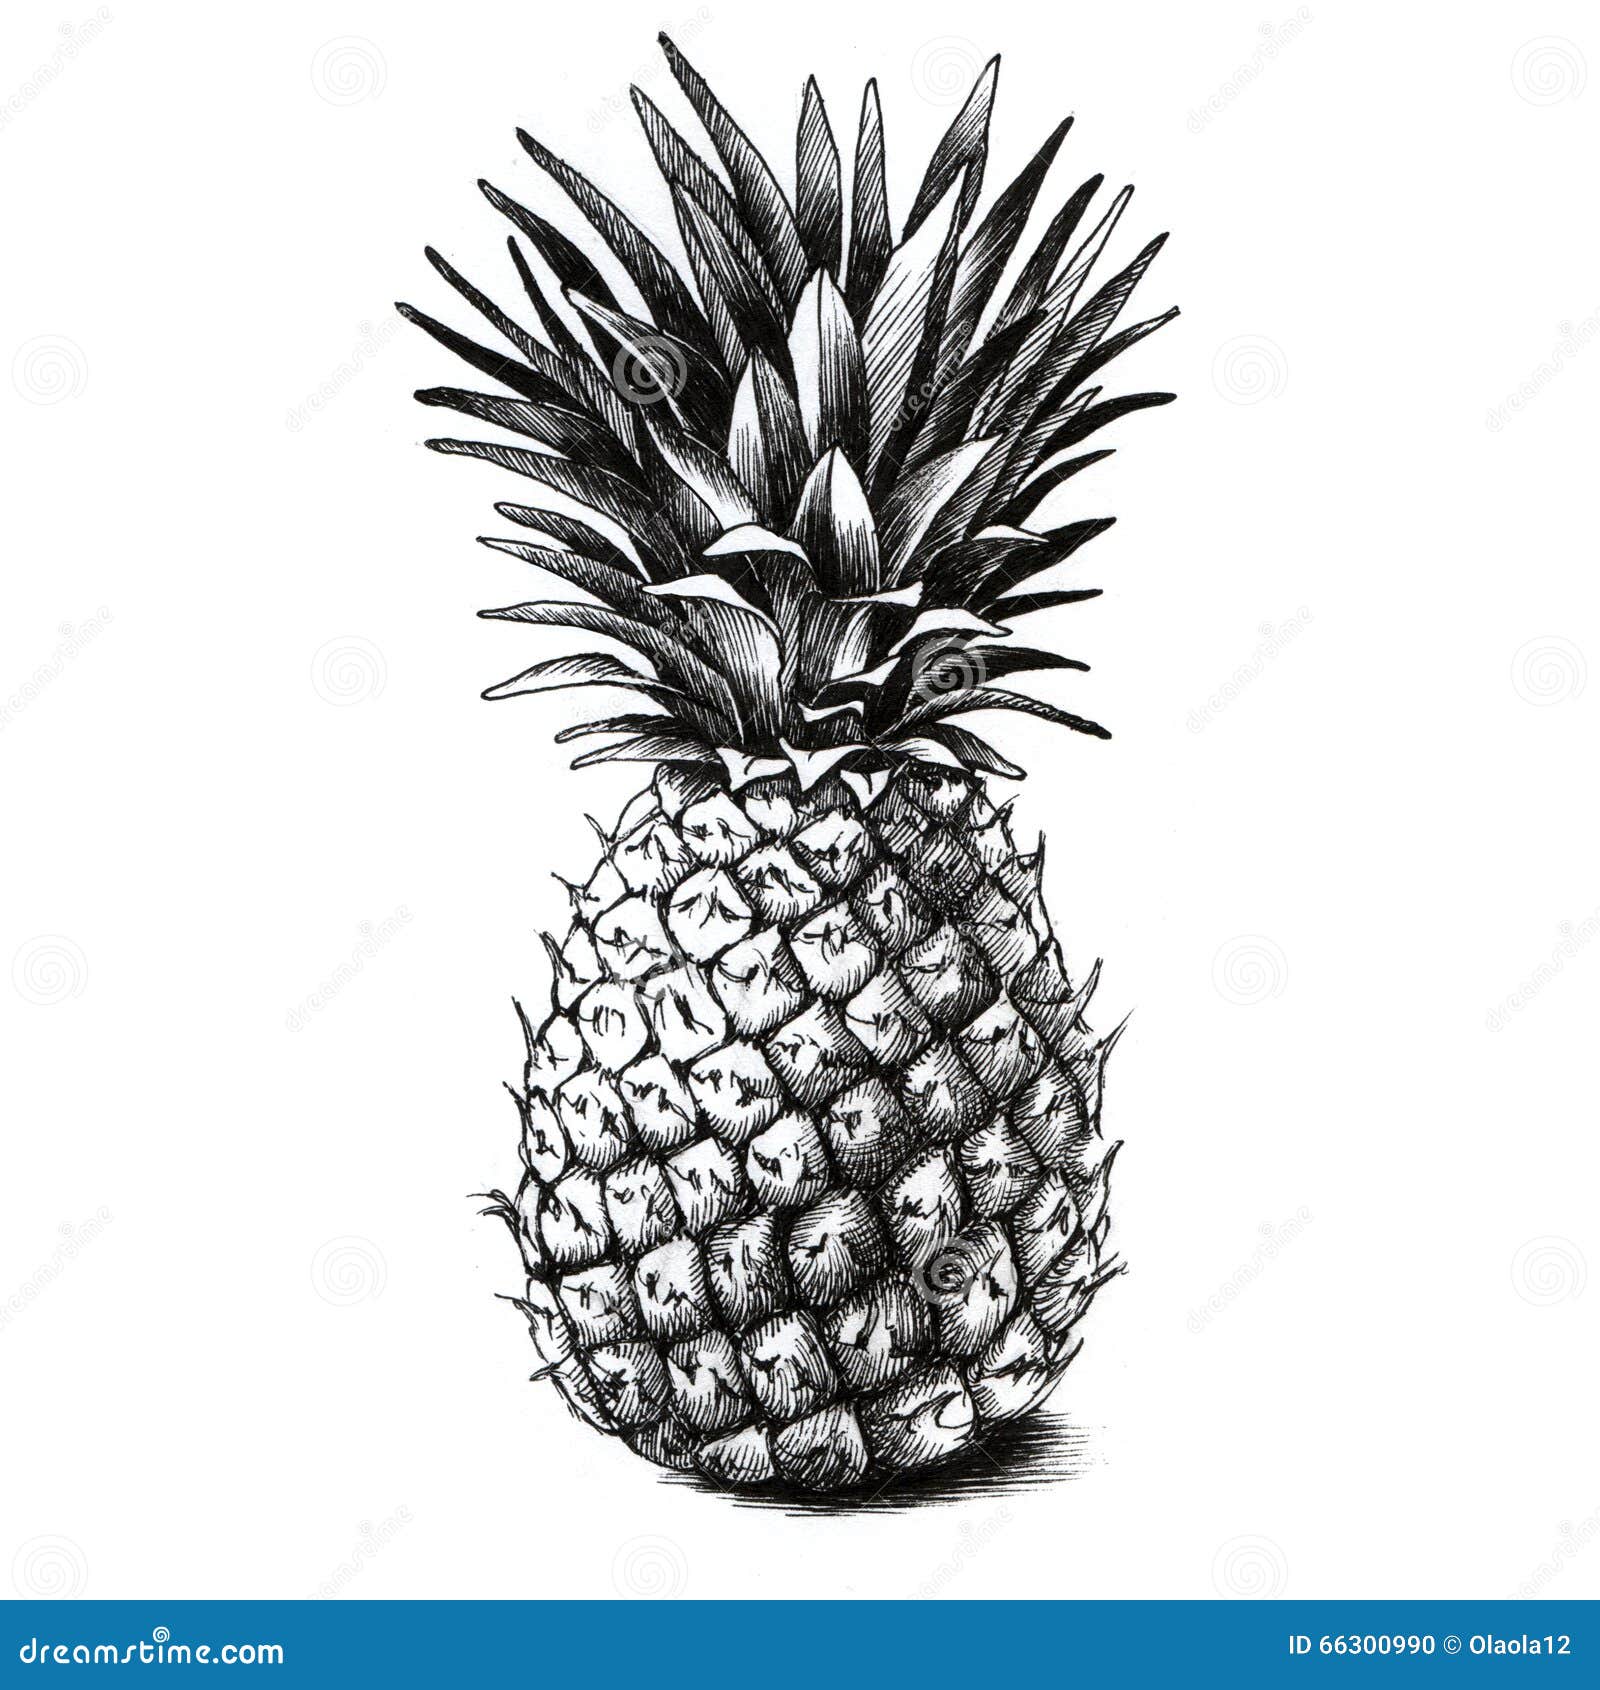 pineapple drawing